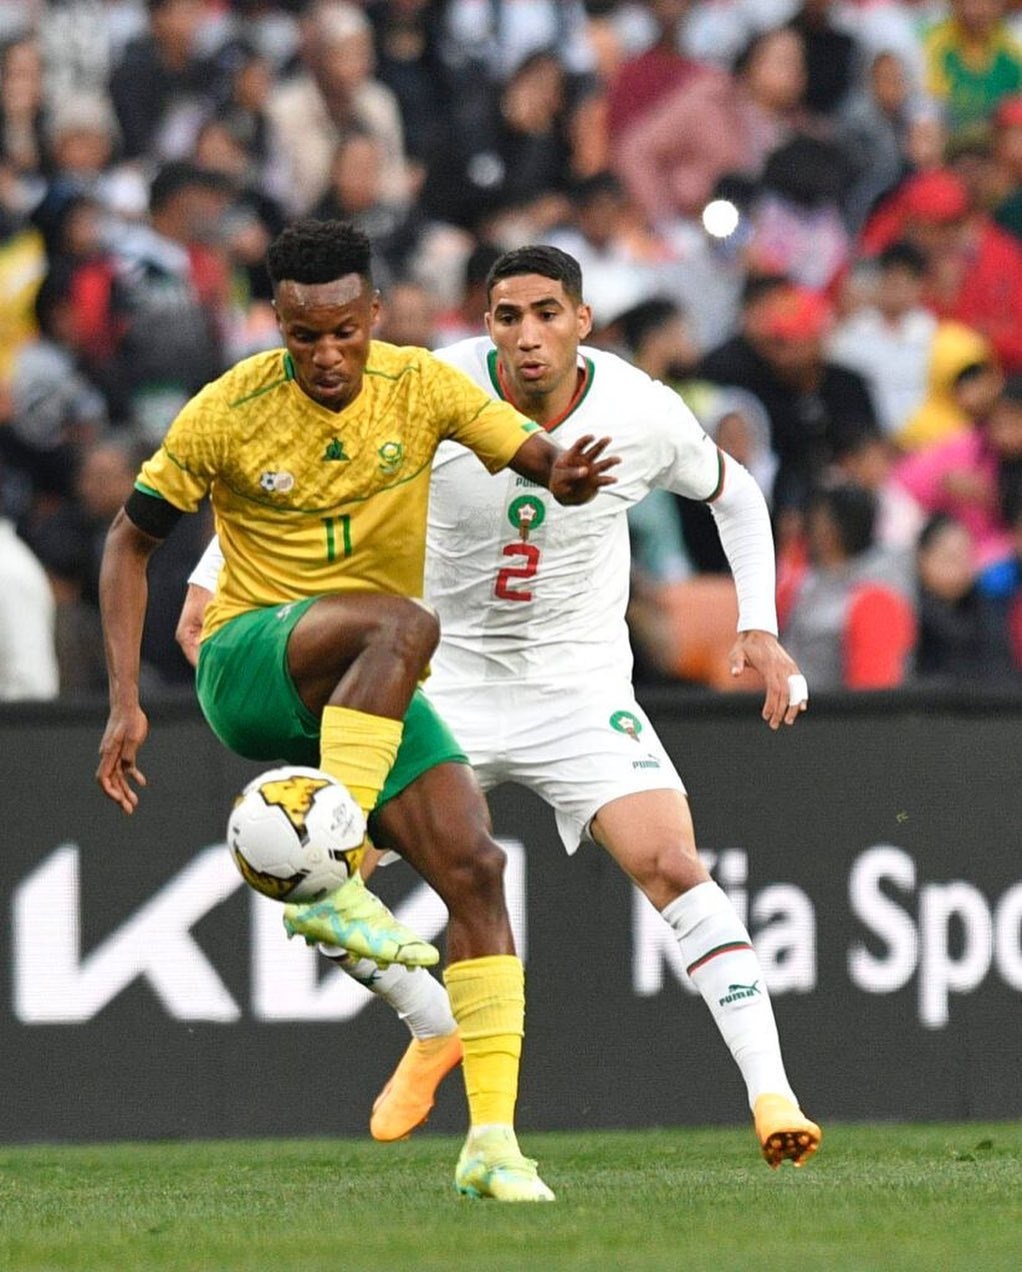 Mamelodi Sundowns star Themba Zwane is the highest rated player in Bafana's starting 11 that beat Morocco.